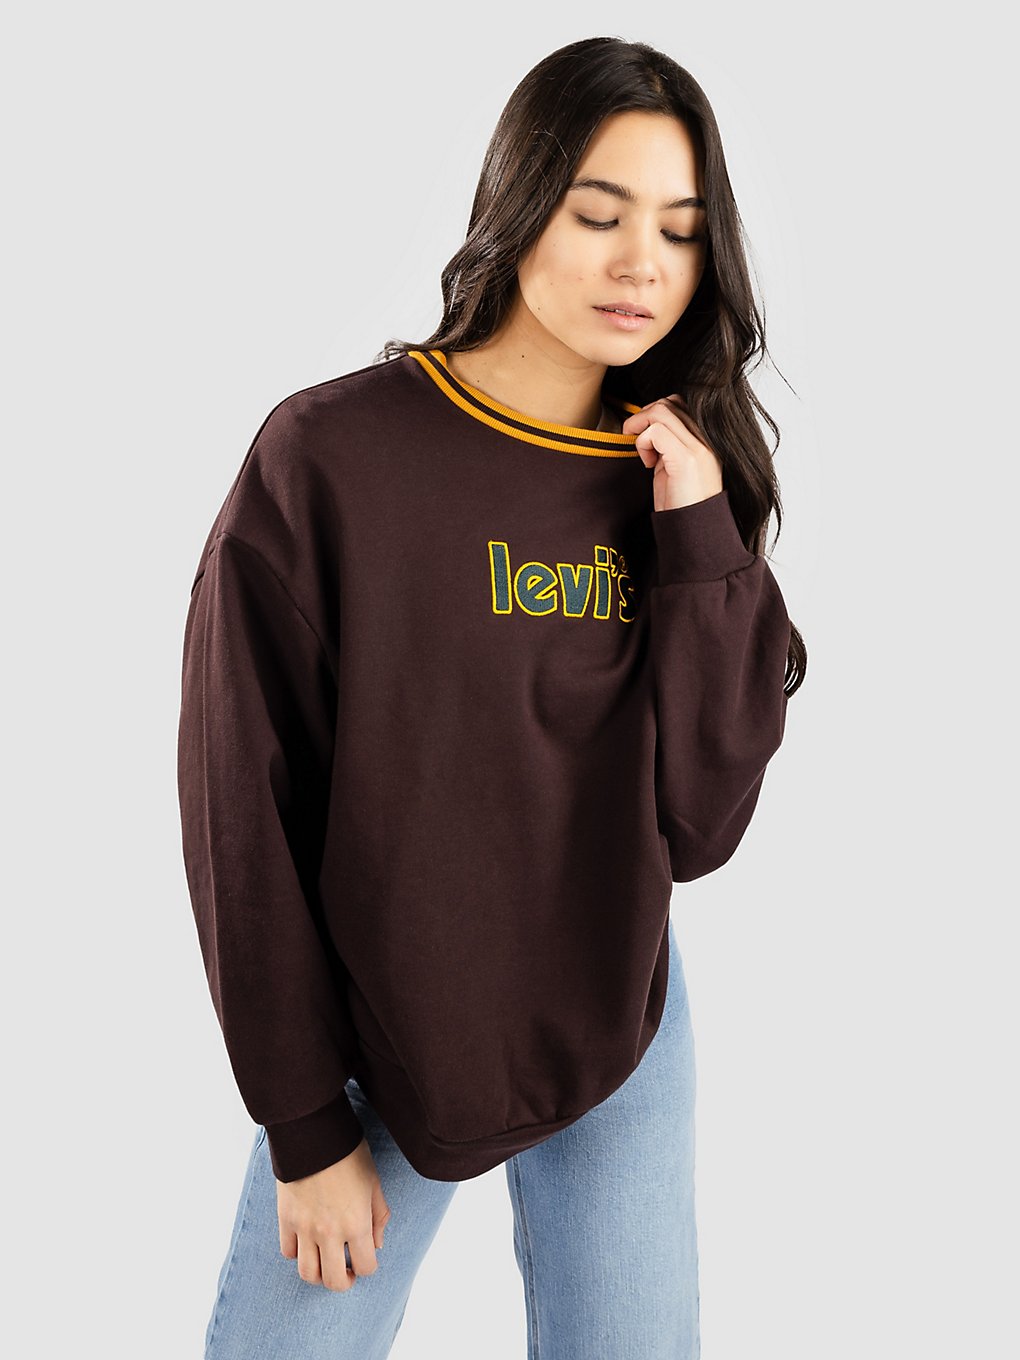 Levi's Graphic Prism Crew Sweater crew fuzzy poster logo kaufen